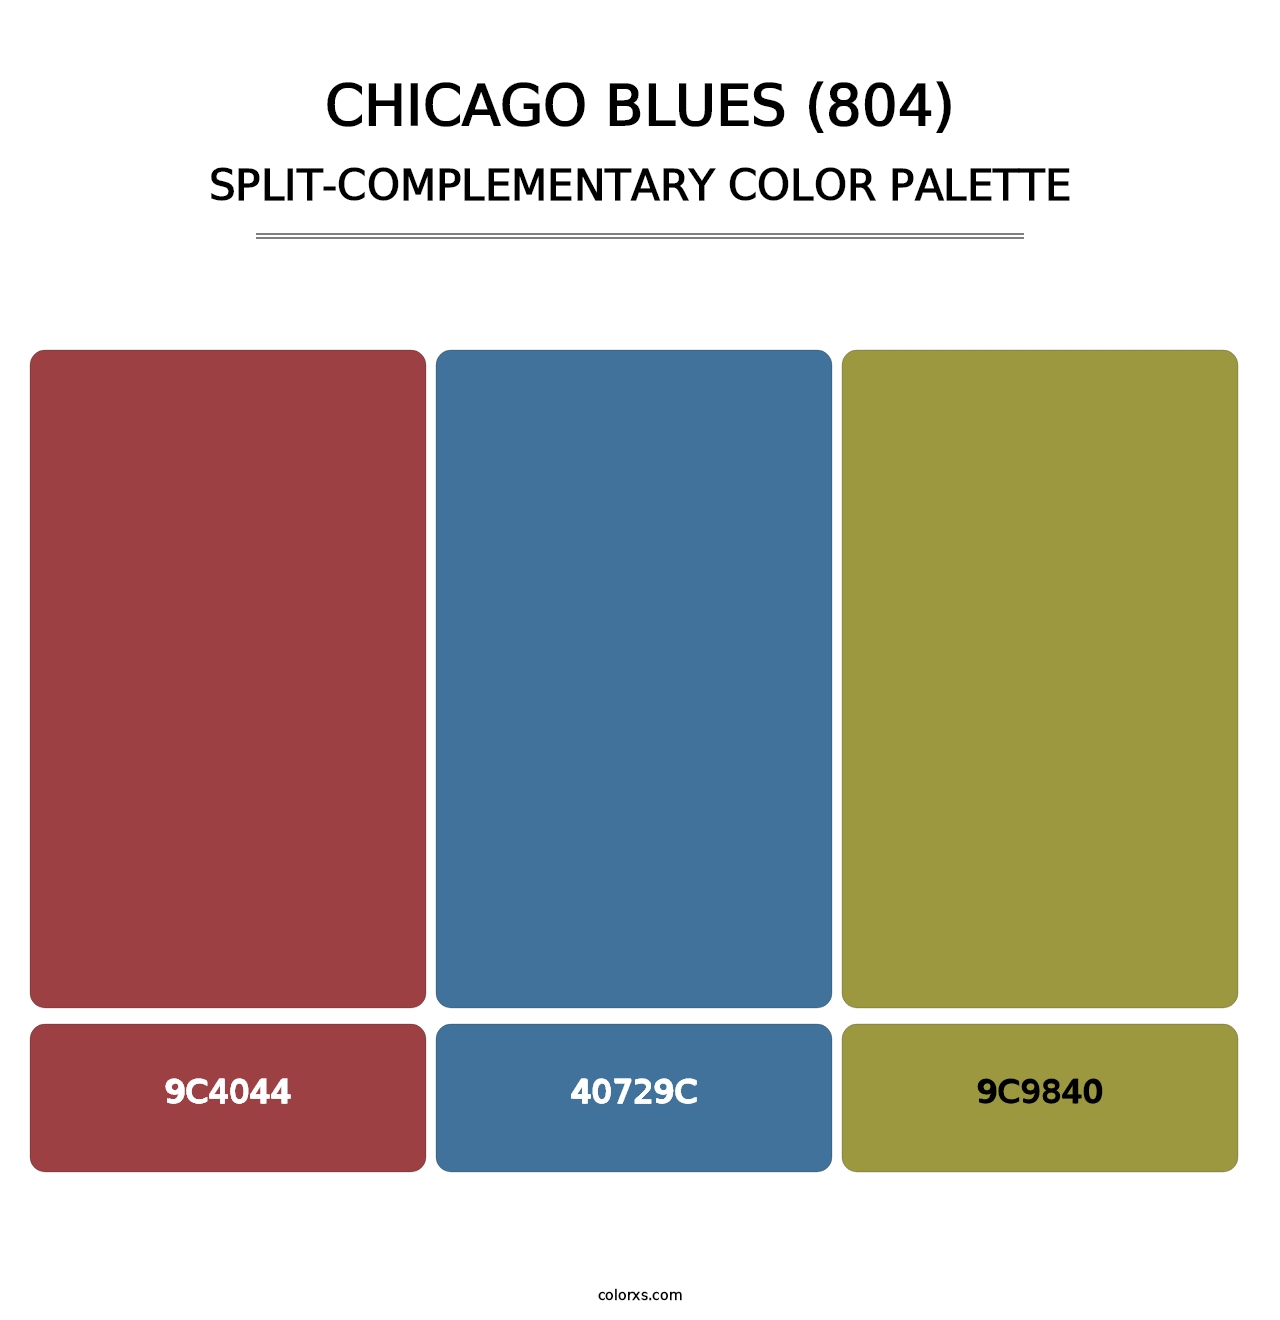 Chicago Blues (804) - Split-Complementary Color Palette